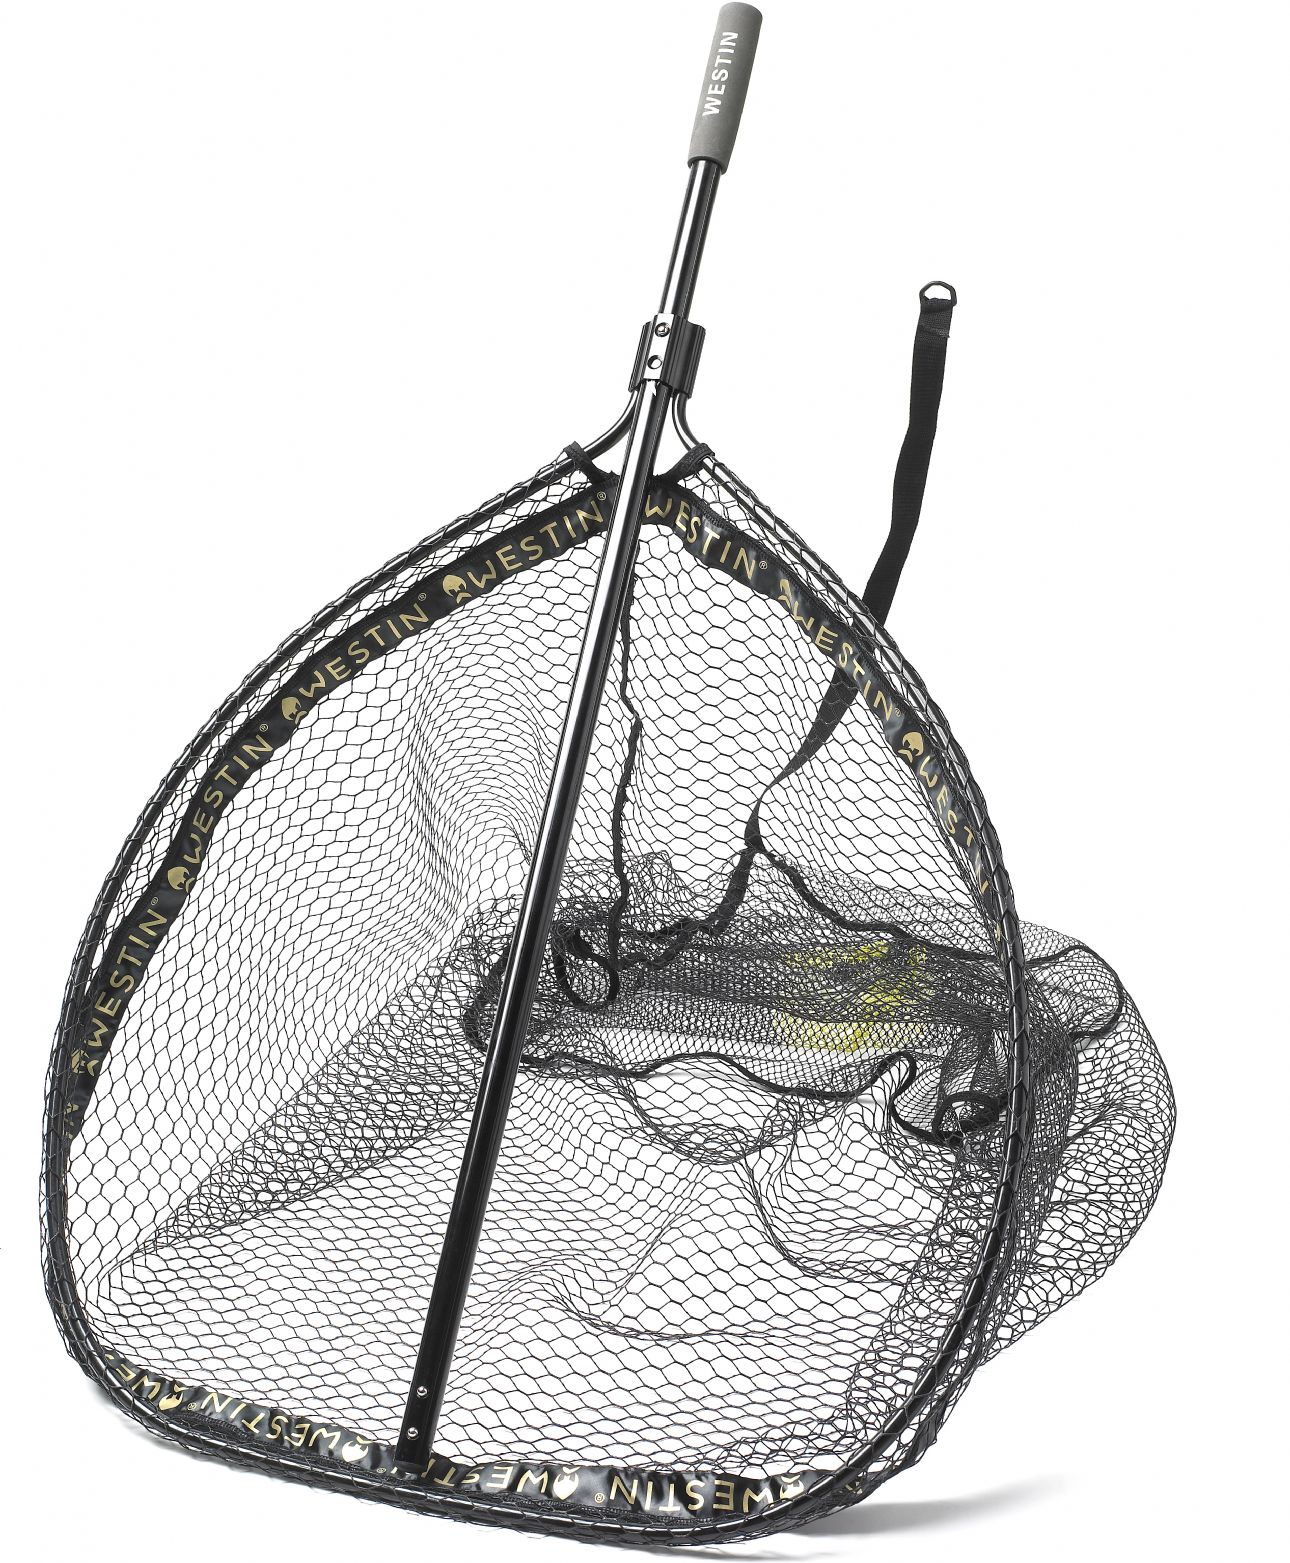 Pezon & Michel 3 Piece Telescopic Folding Landing Net from Predator Tackle